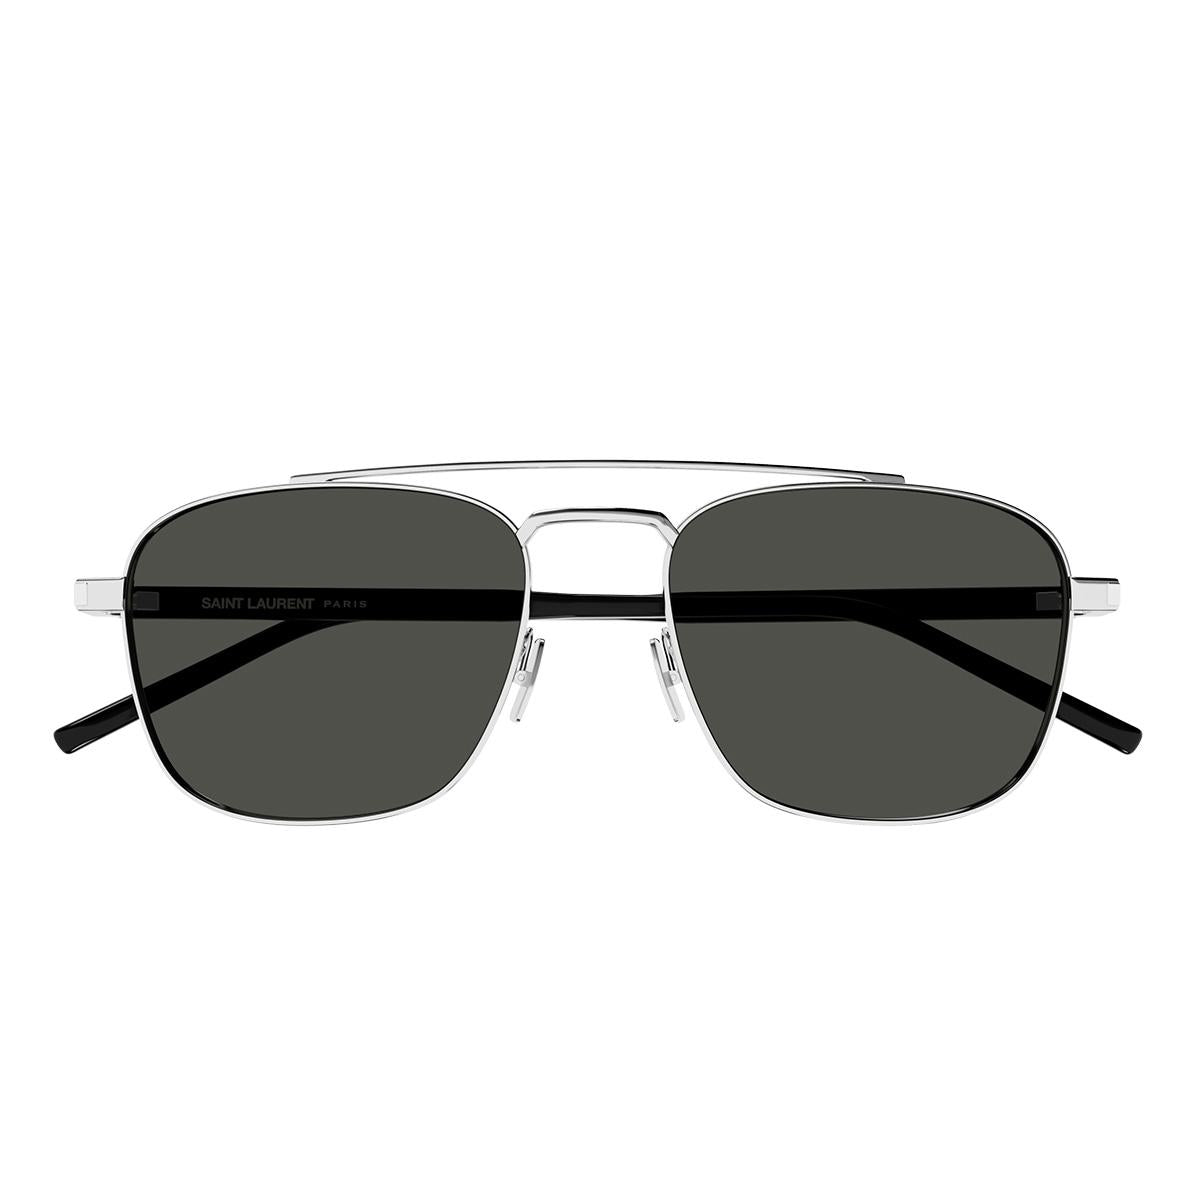 Saint Laurent Eyewear Sunglasses In Gray